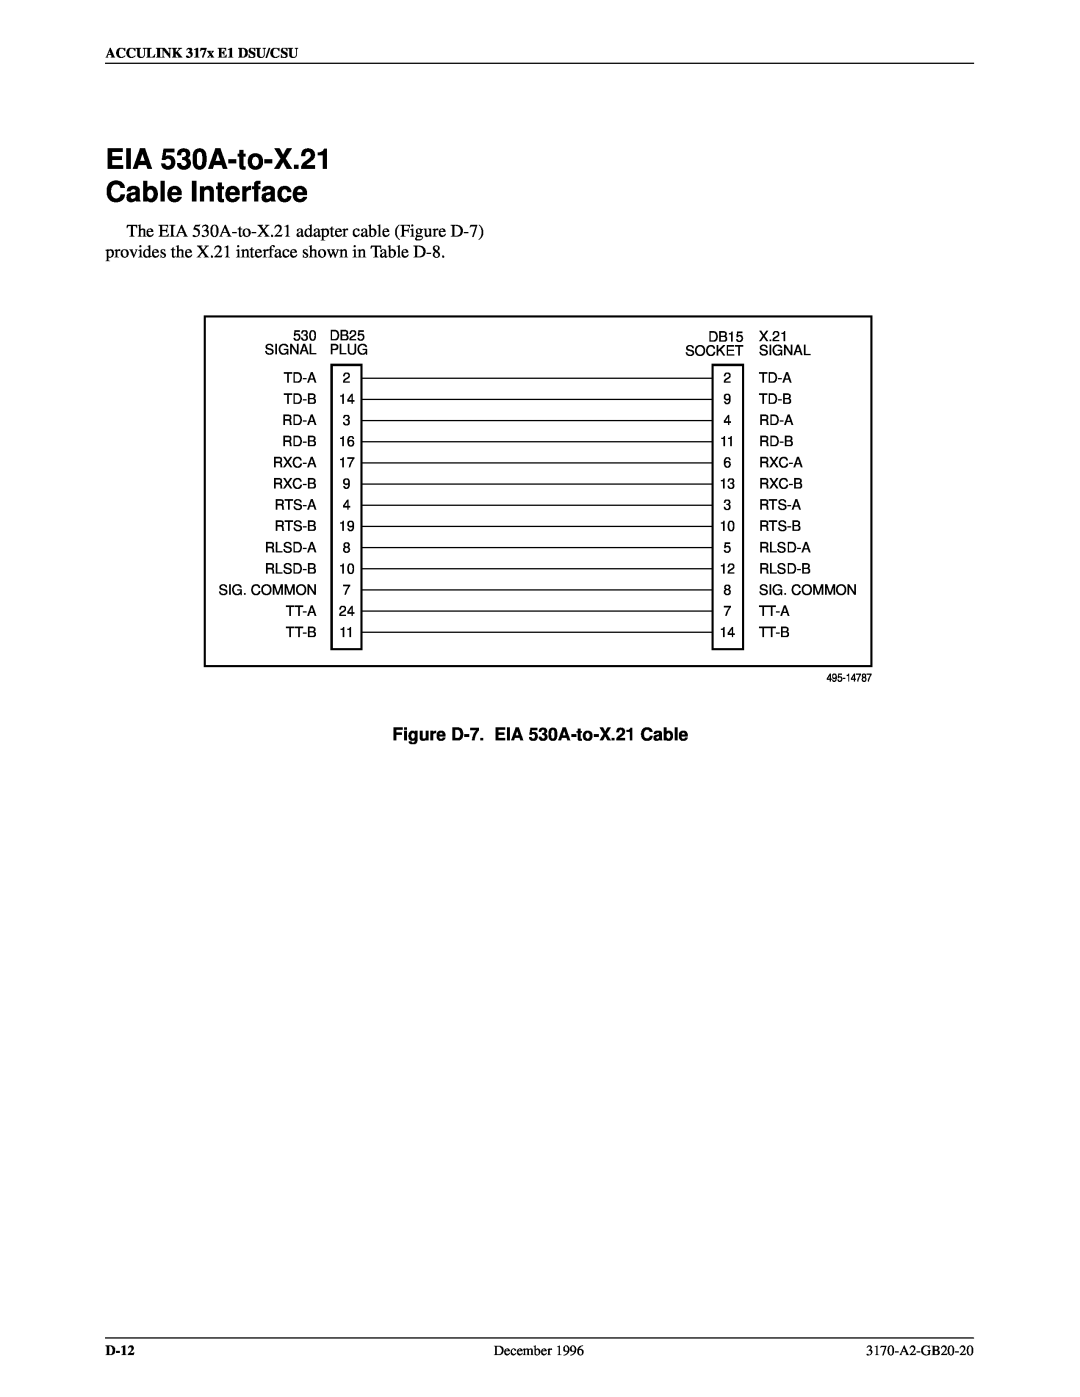 Paradyne manual EIA 530A-to-X.21 Cable Interface, Figure D-7. EIA 530A-to-X.21 Cable, ACCULINK 317x E1 DSU/CSU, D-12 